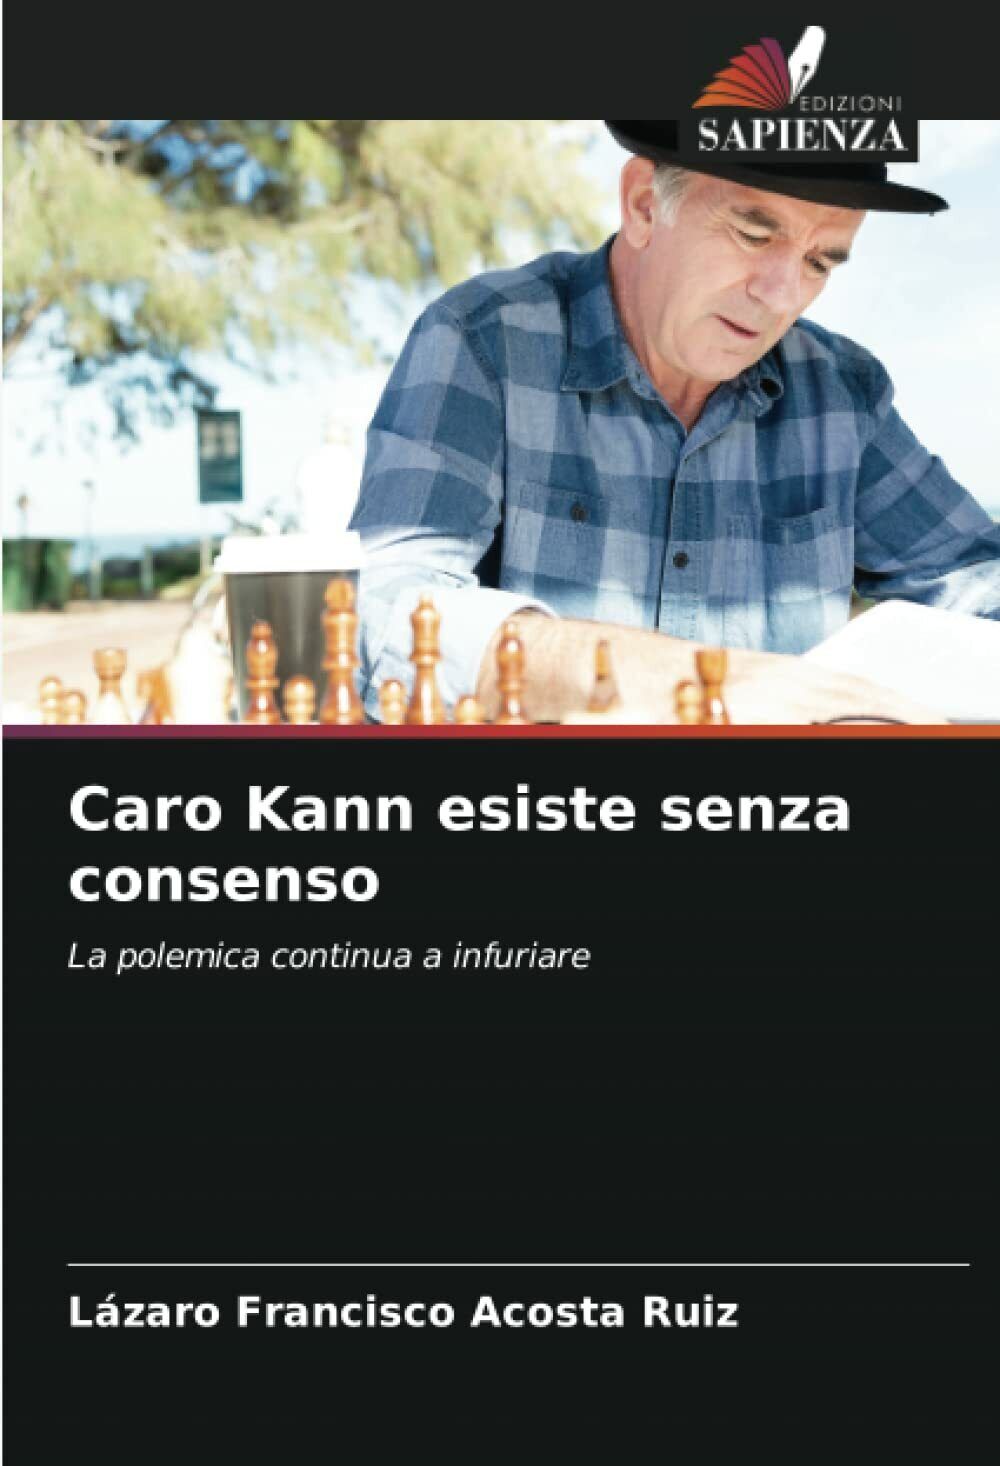 Caro Kann esiste senza consenso - L?zaro Francisco Acosta Ruiz - Sapienza, 2021